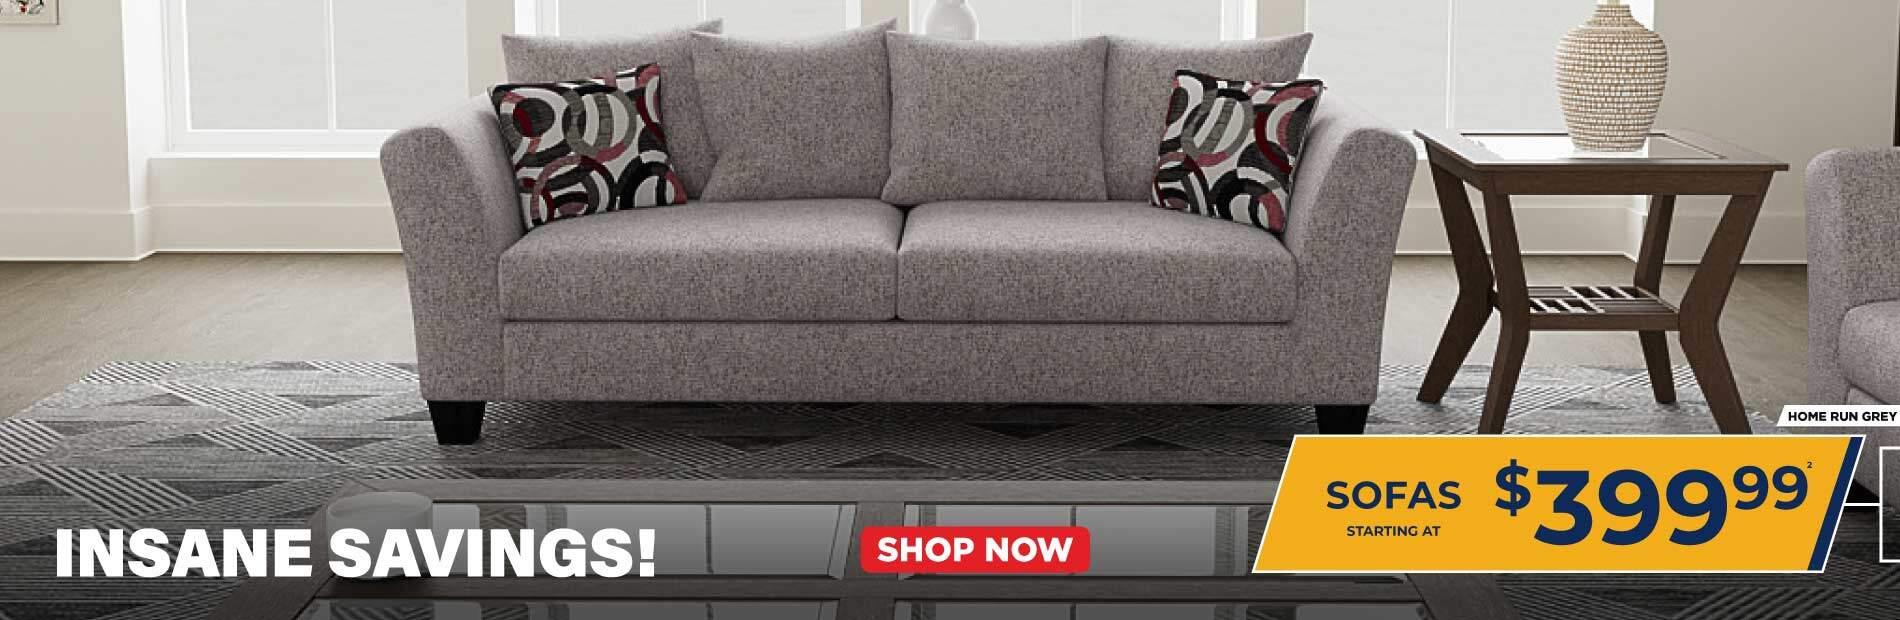 Insane Savings! Home Run Grey. Sofas starting at 399.99.2. Shop now